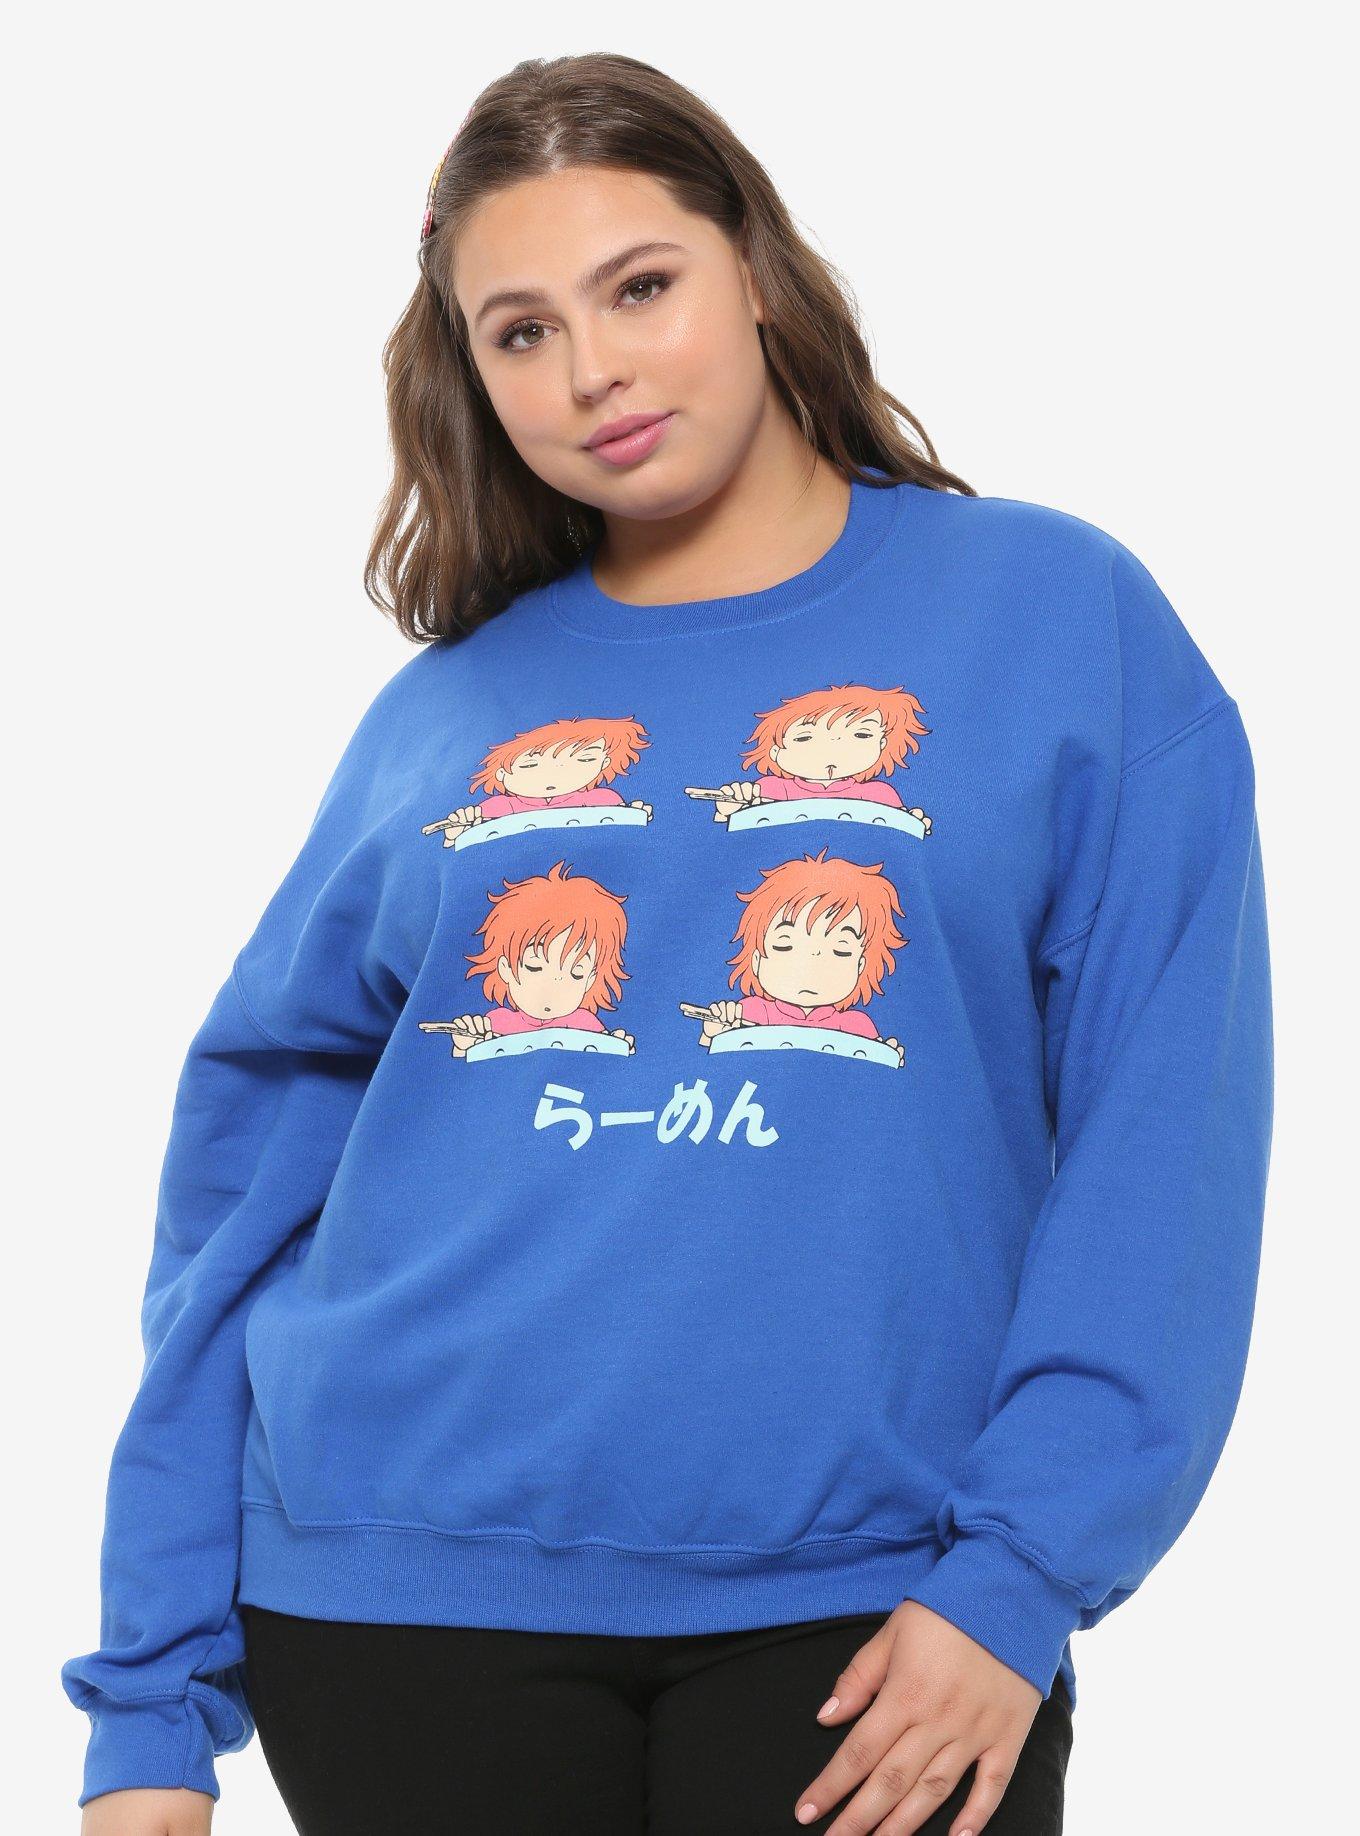 Studio Ghibli Ponyo Sleepy Ramen Girls Sweatshirt Plus Size, MULTI, hi-res